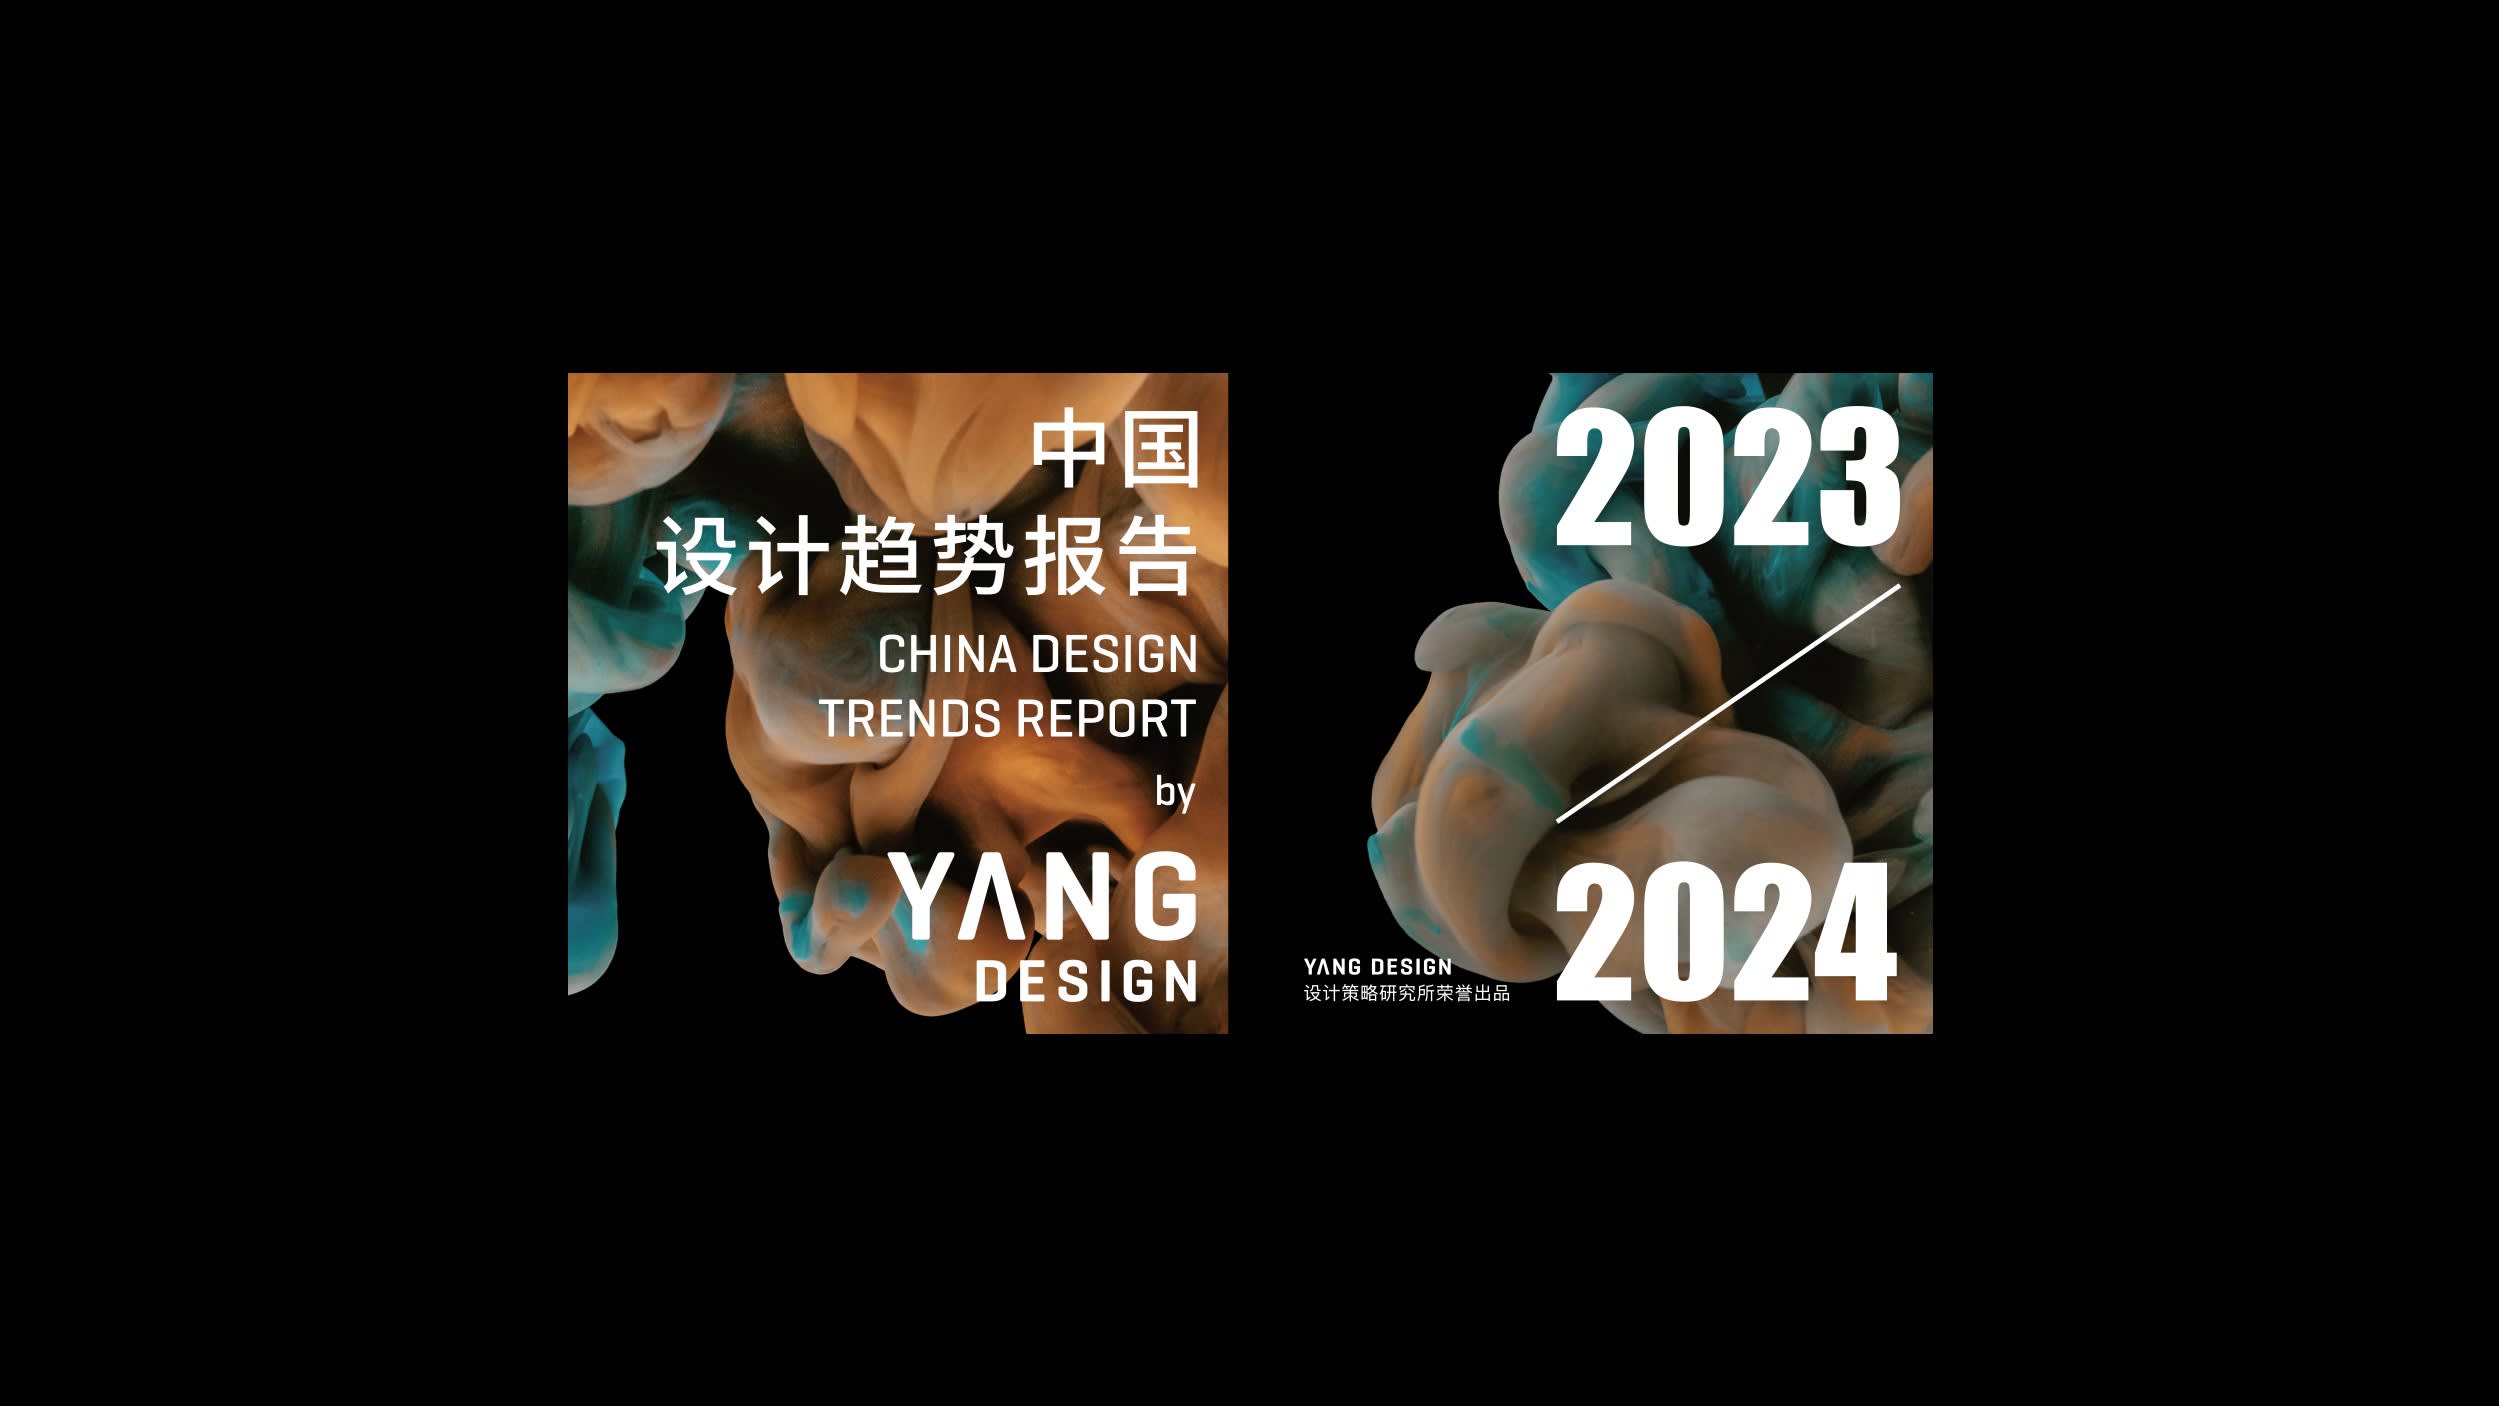 iF DESIGN MARATHON 2022: Yang Design - China Design Trends Report 2023-2024